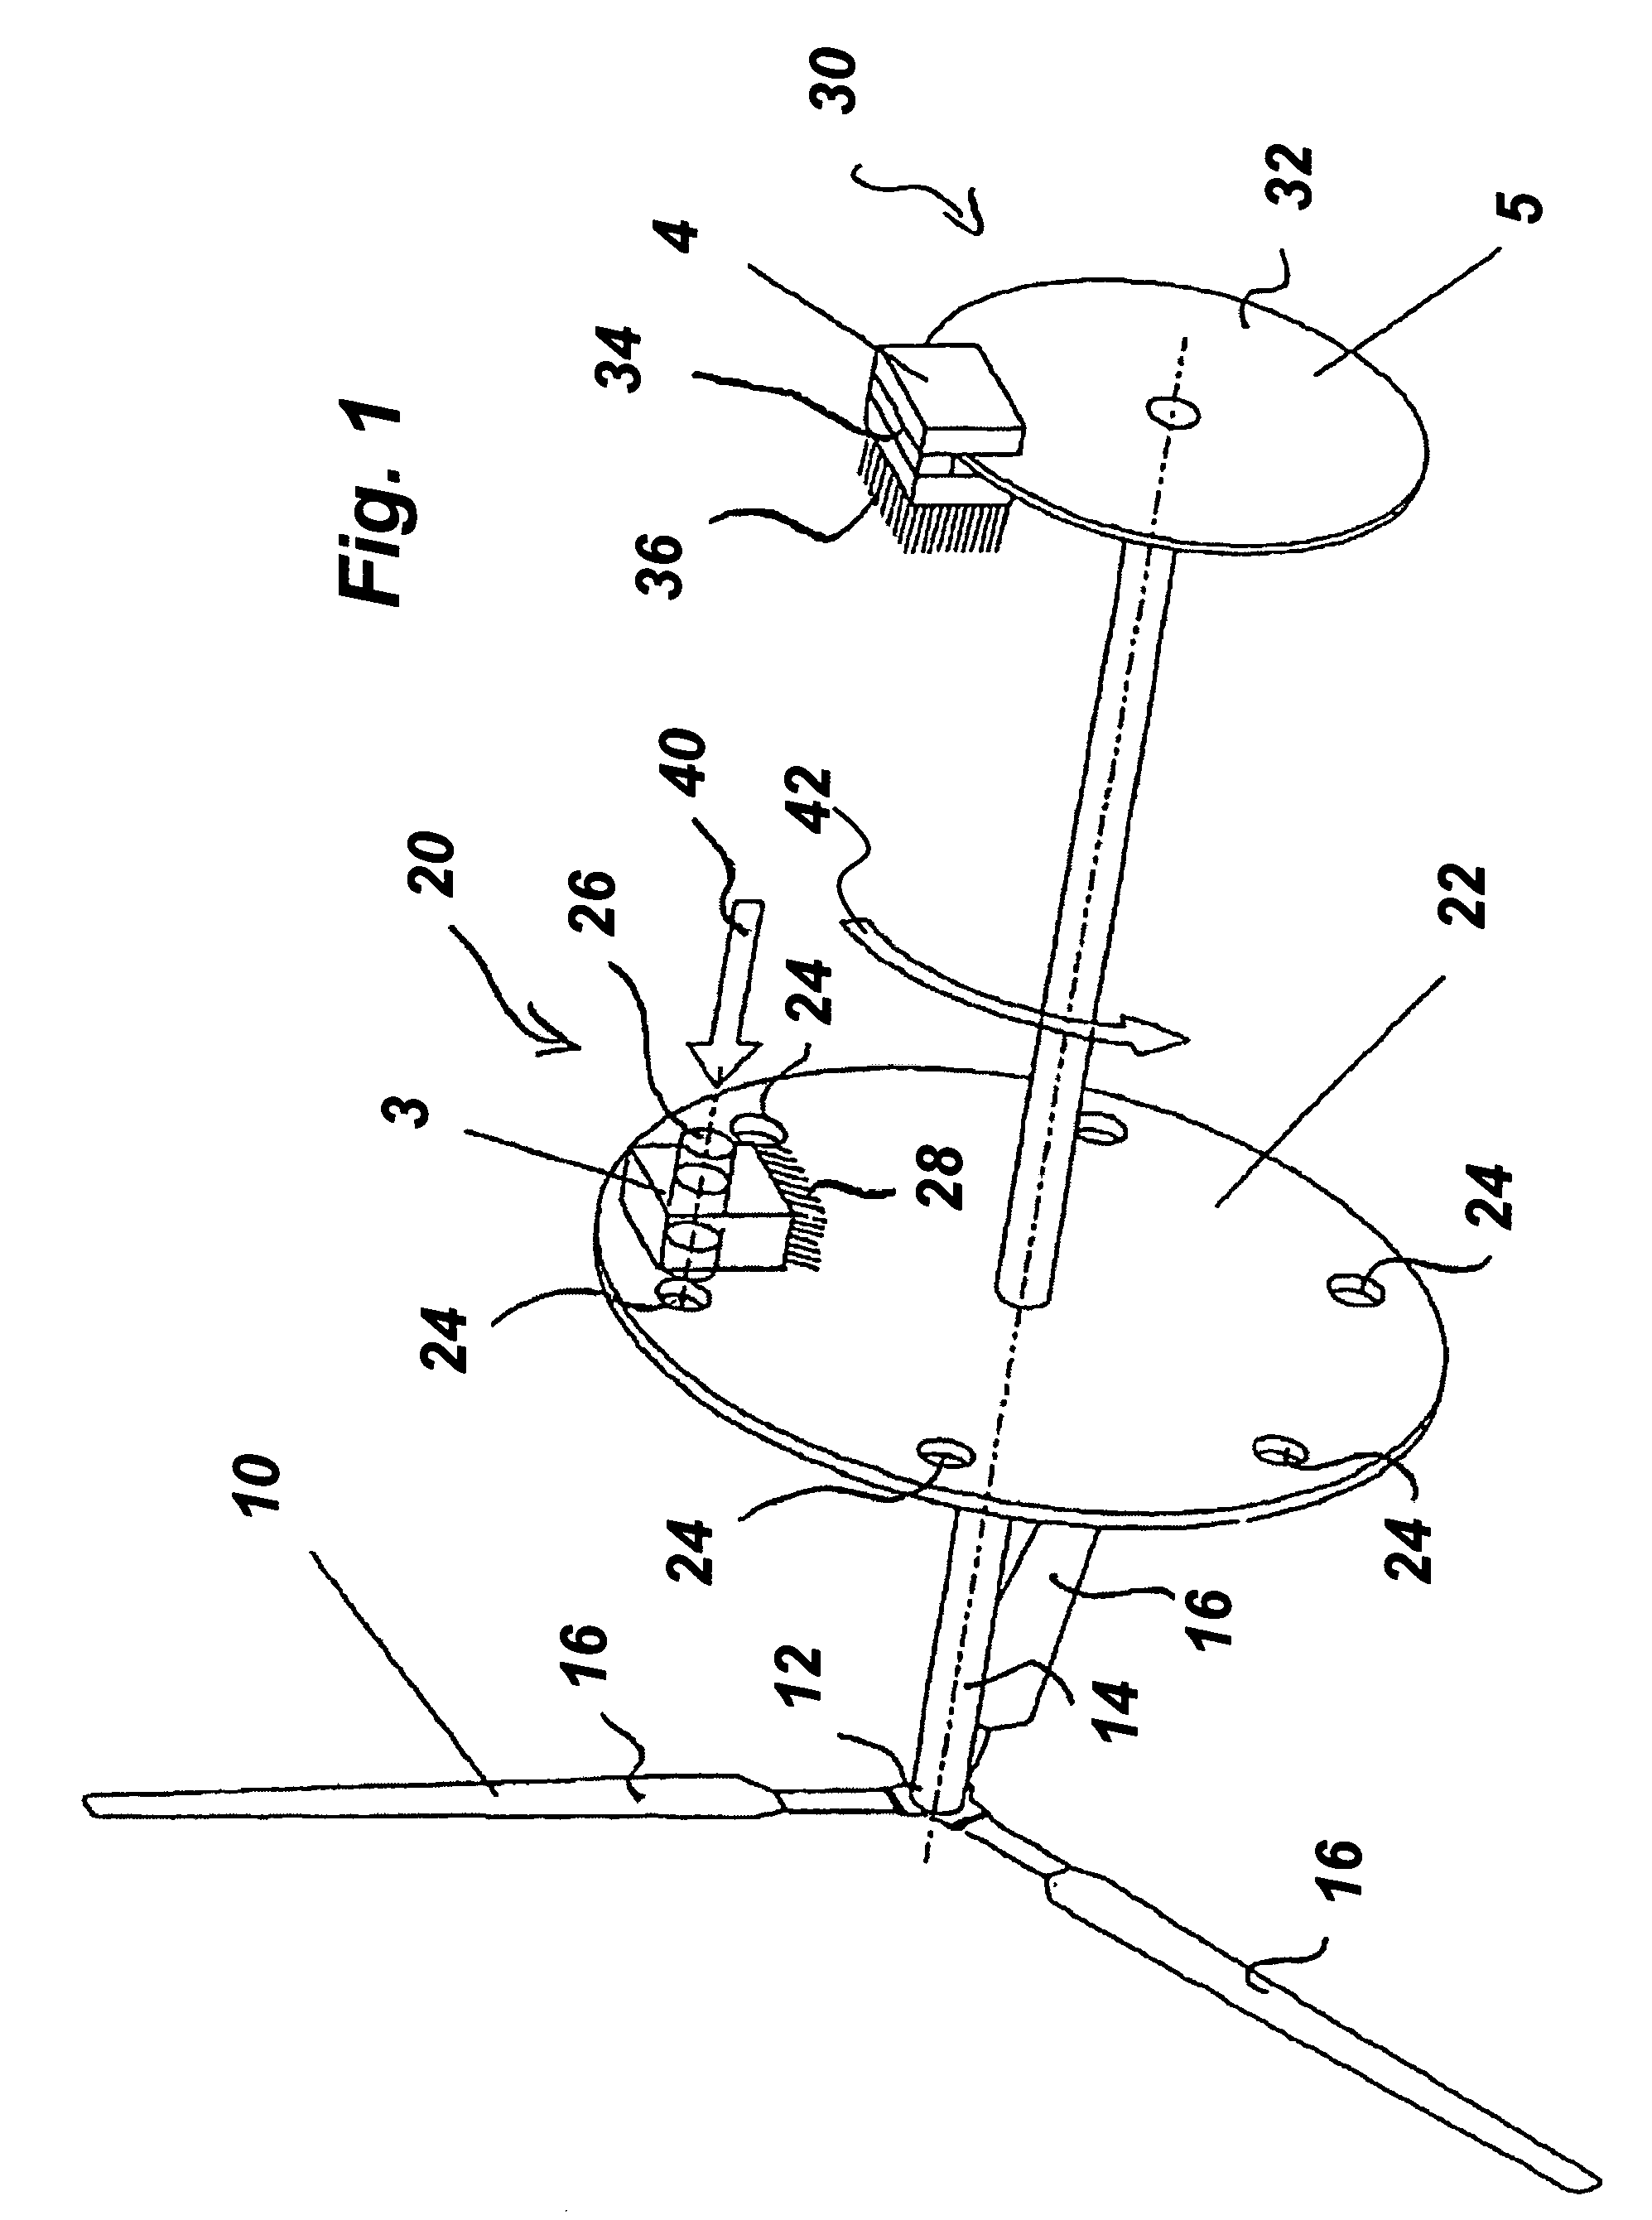 Automatic braking and locking of a wind turbine